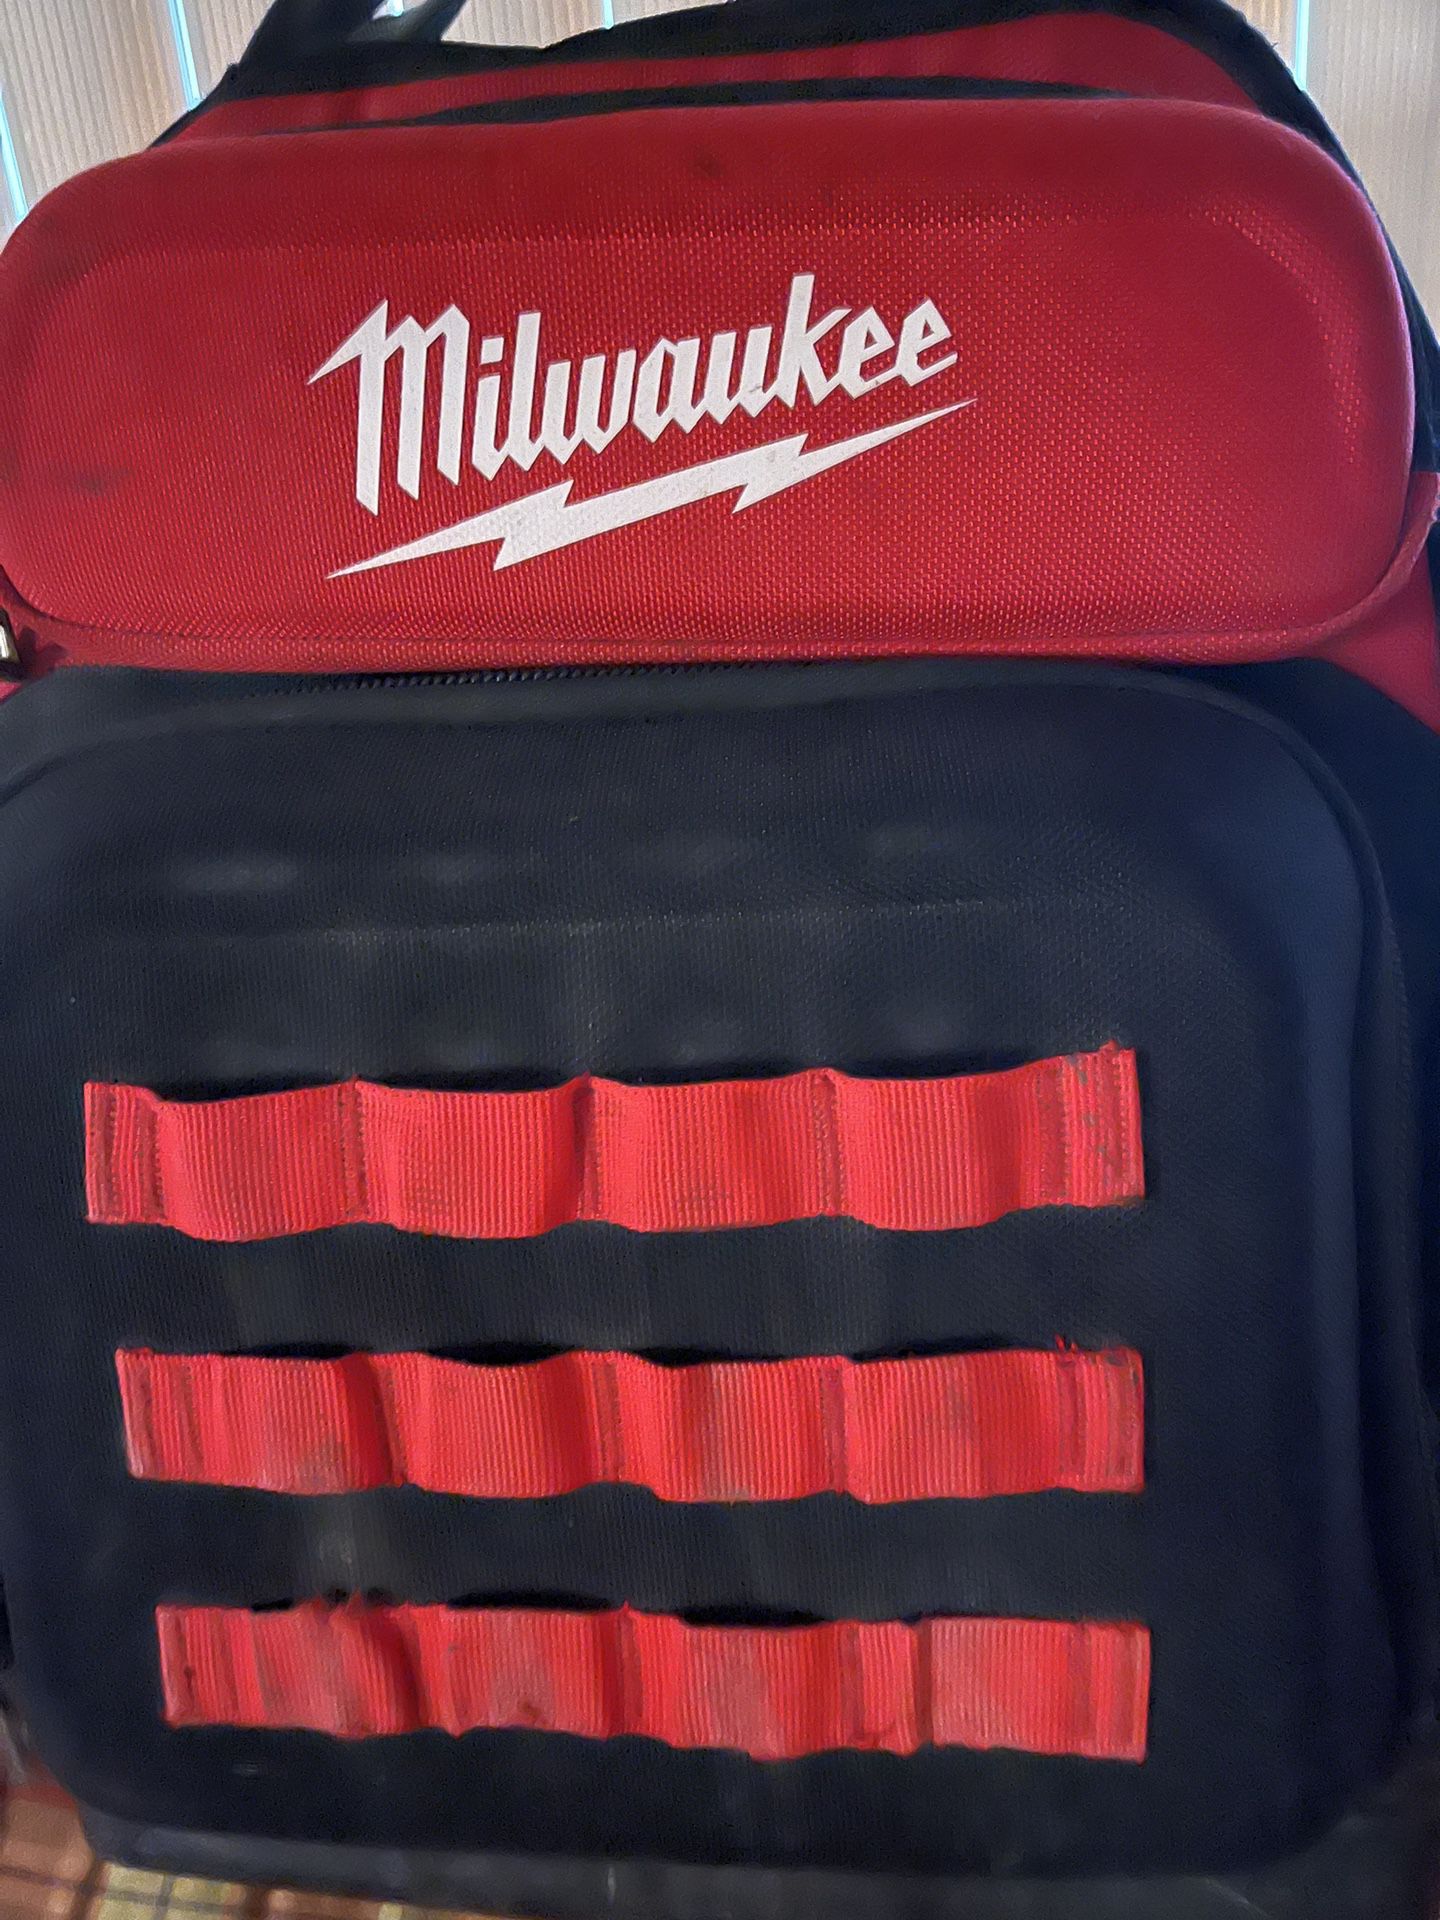 Milwaukee Bag